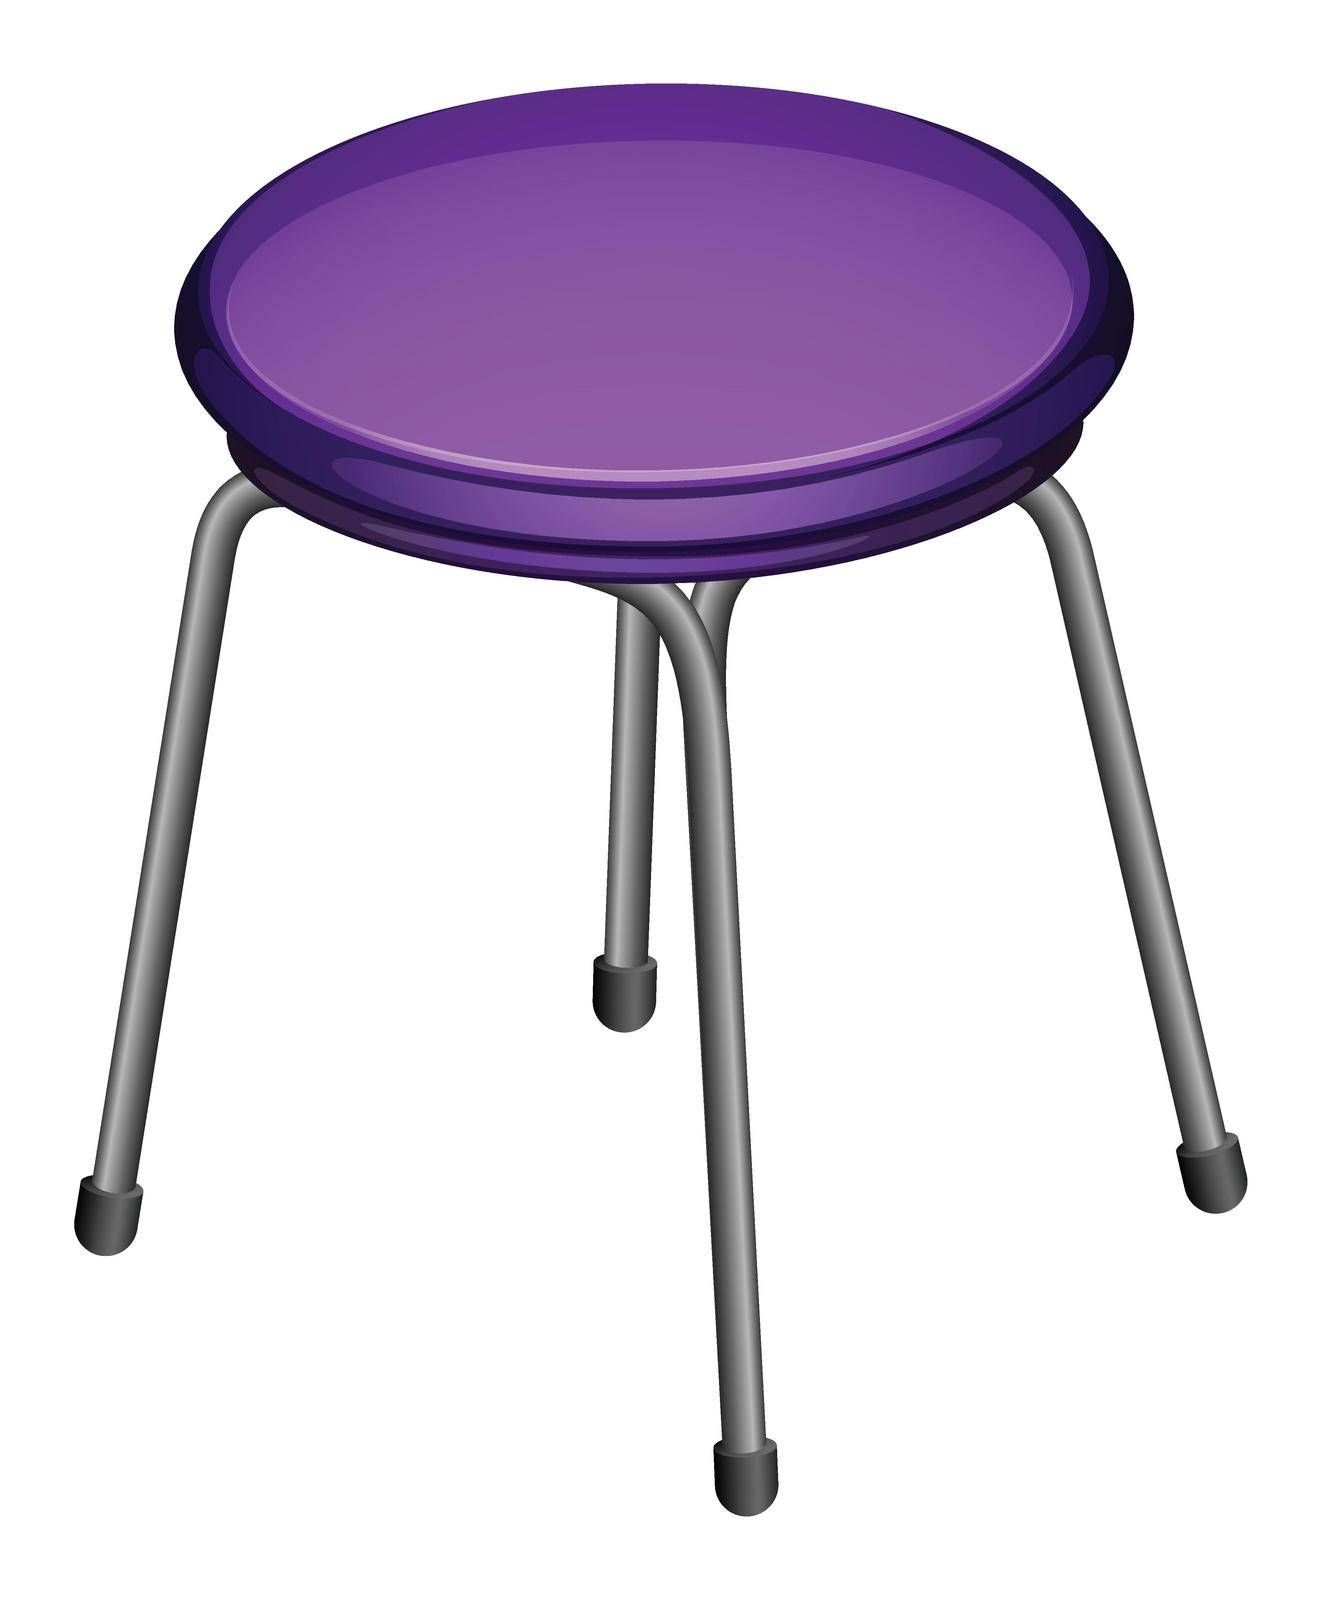 Illustration of a single stool